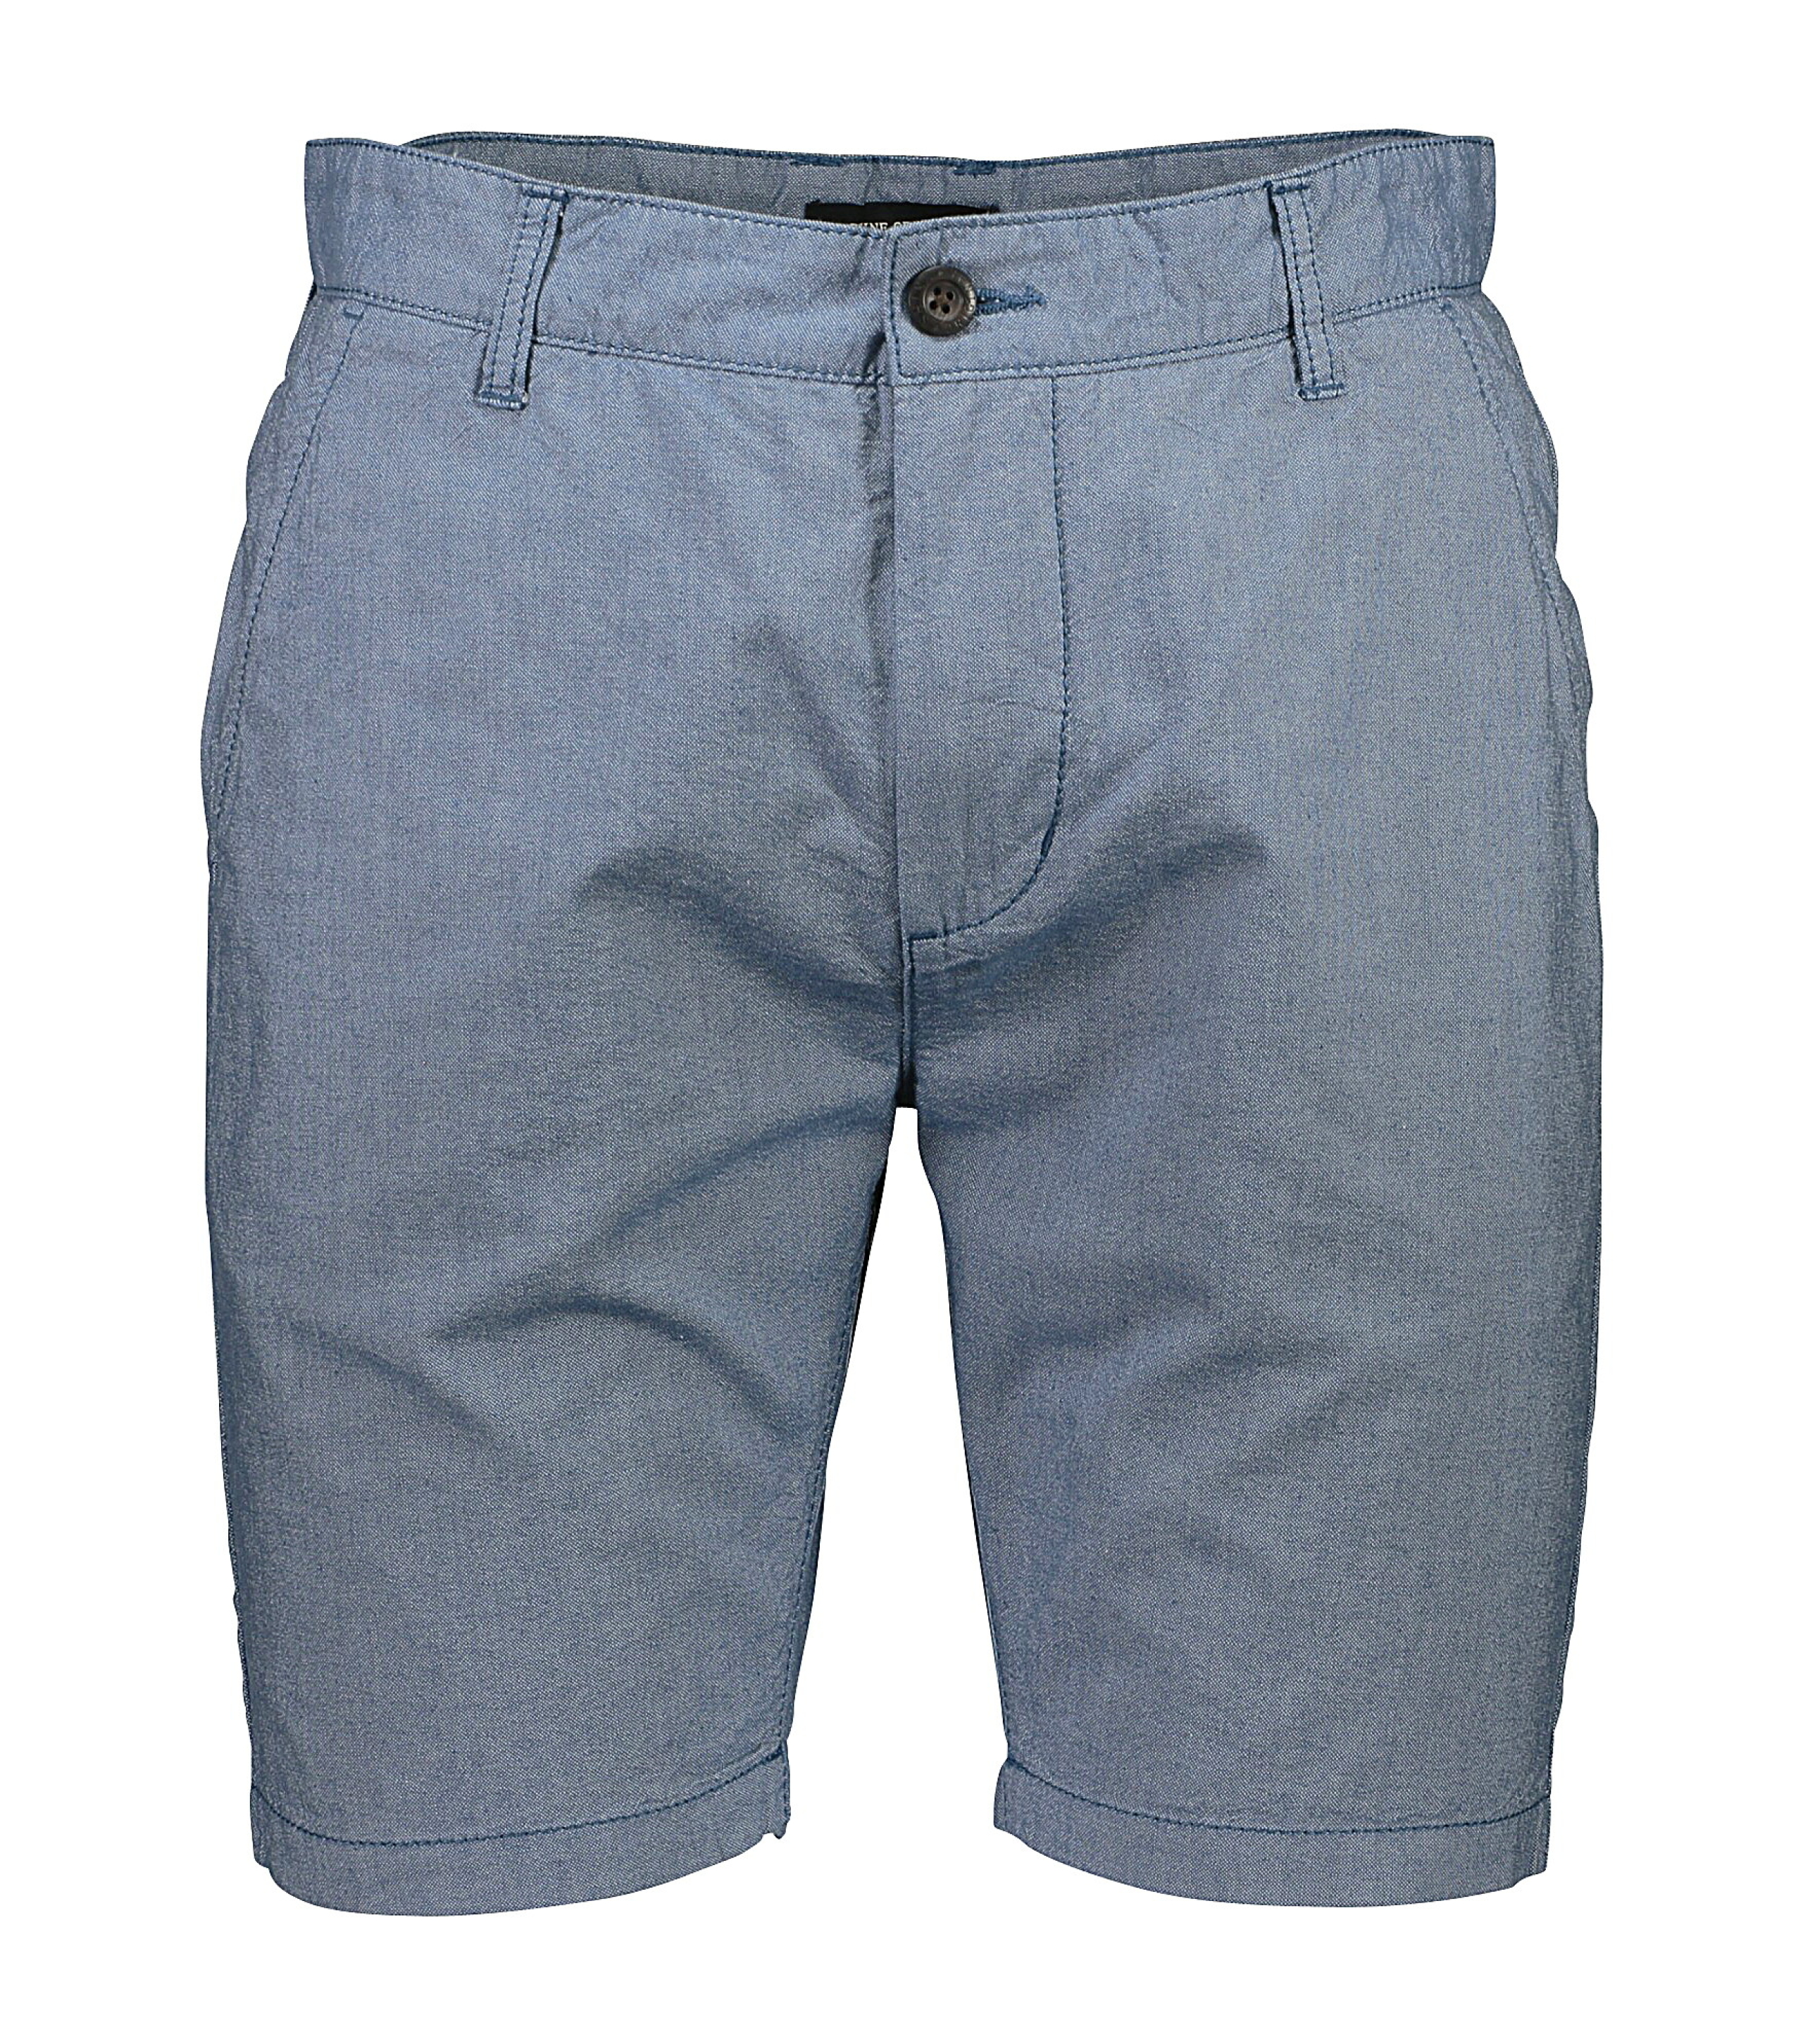 Shine Original Chino shorts blå / dusty blue